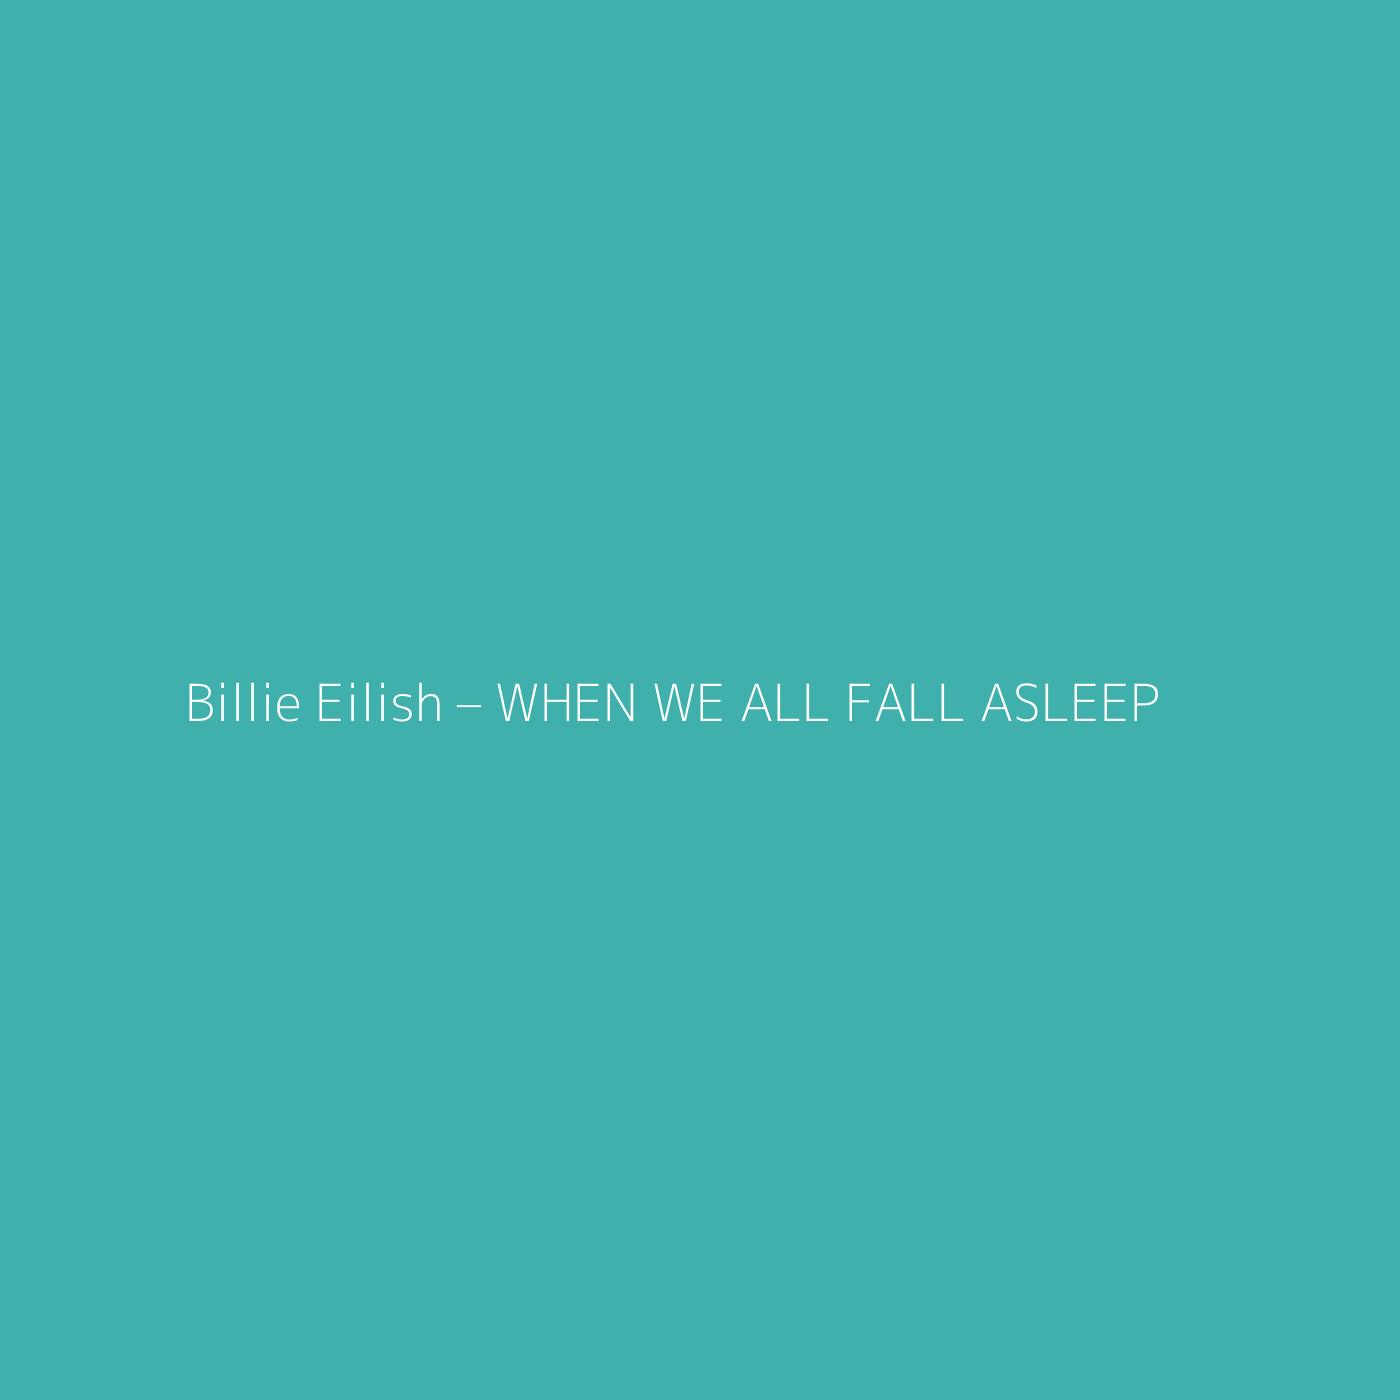 Billie Eilish – WHEN WE ALL FALL ASLEEP